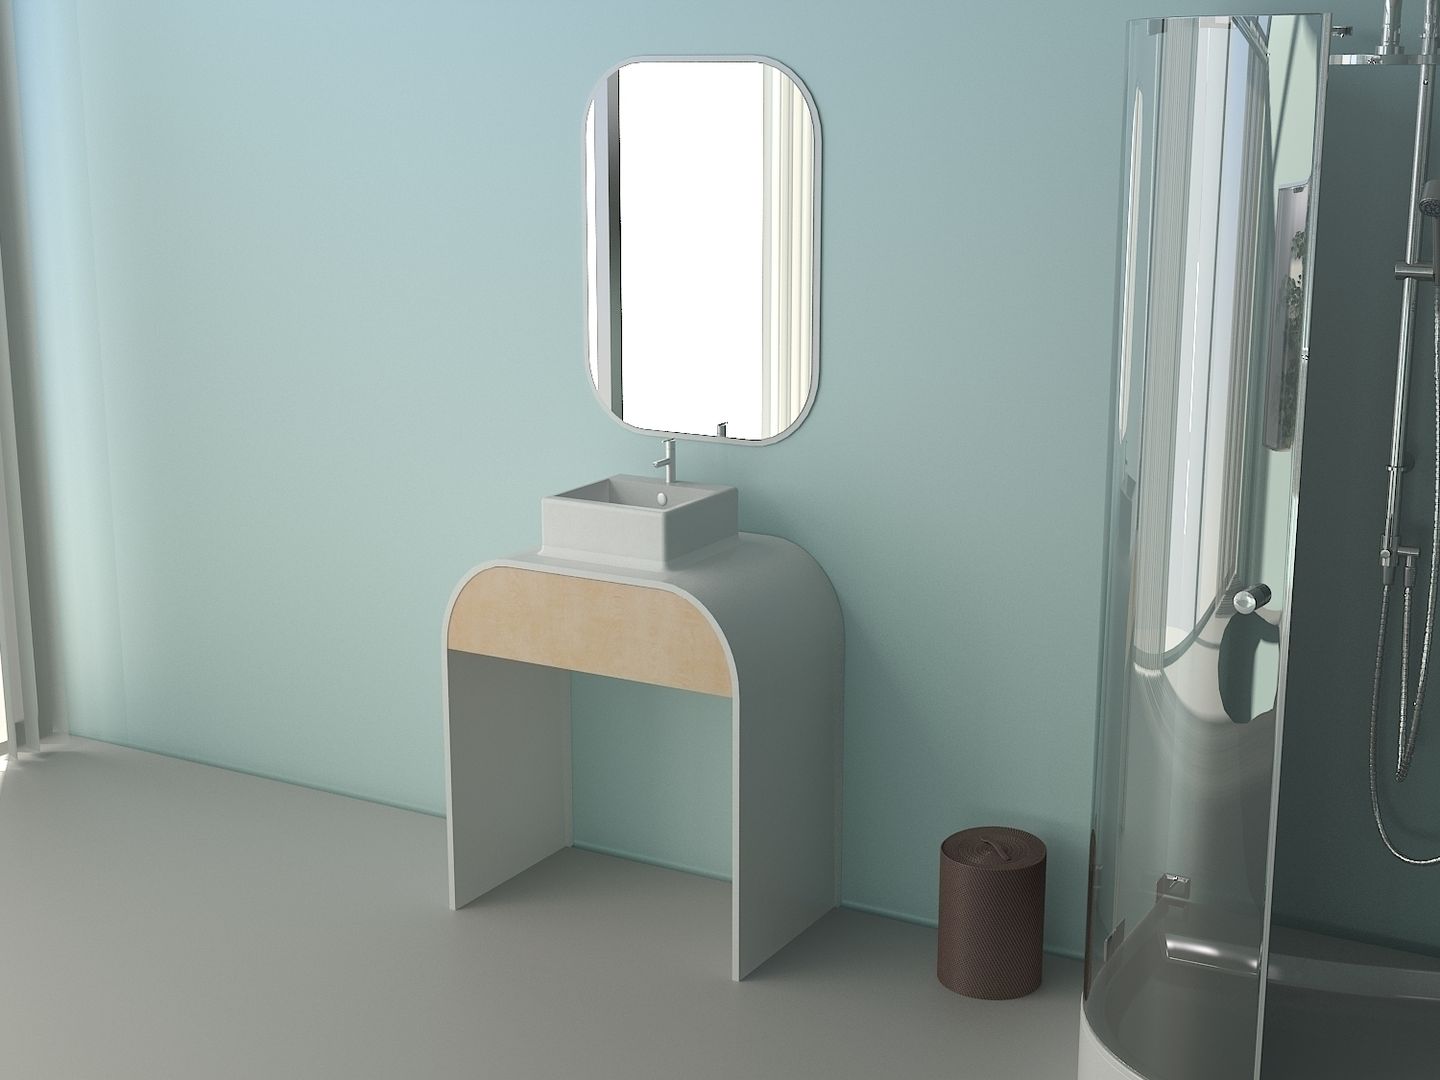 Melt Concept, Tirdad Kiamanesh Tirdad Kiamanesh ห้องน้ำ ตู้เก็บของในห้องน้ำ